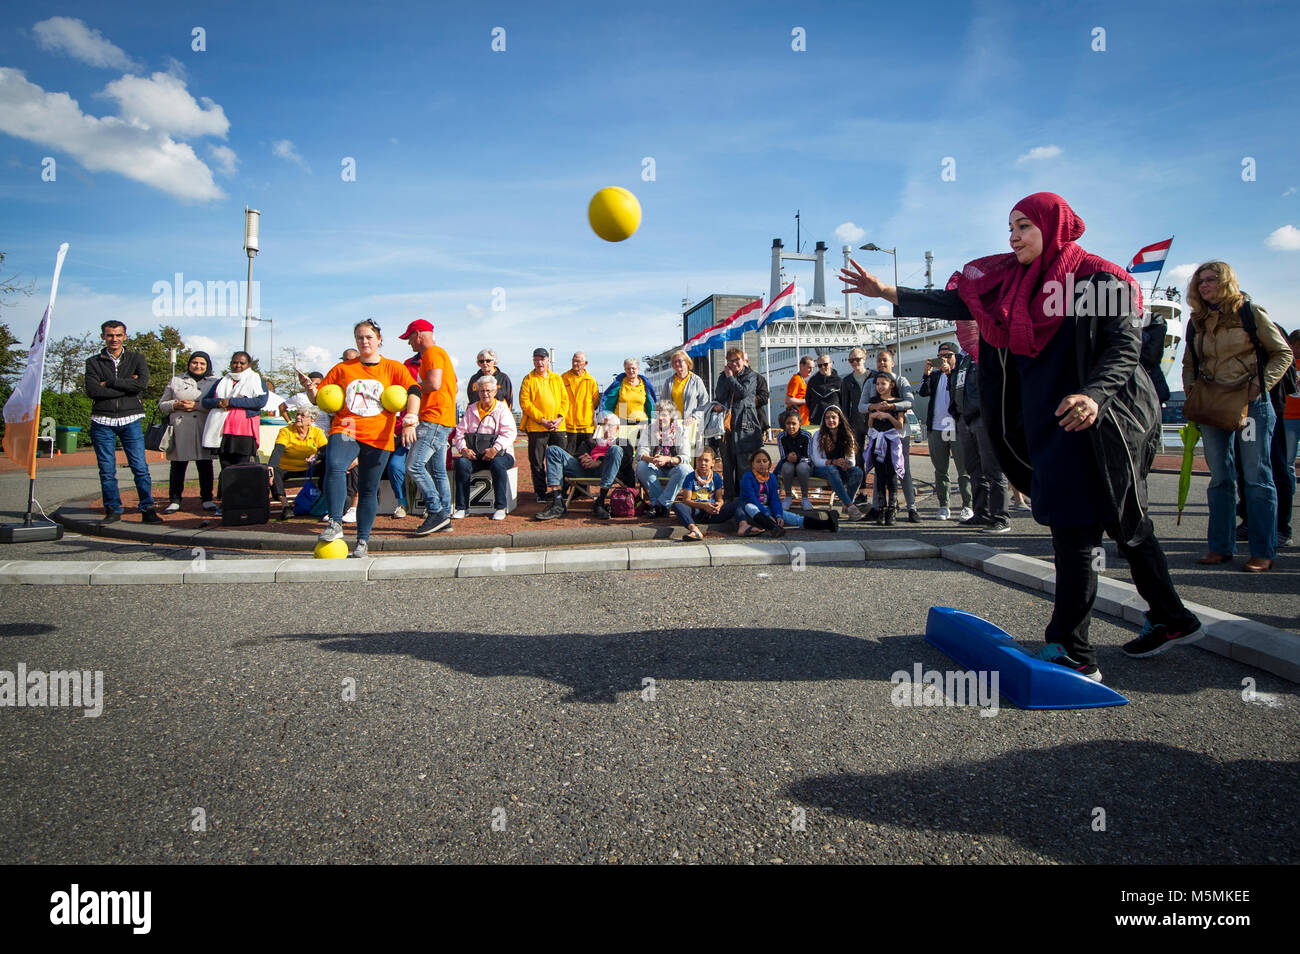 Playing curb ball. Dutch Championship Stock Photo - Alamy